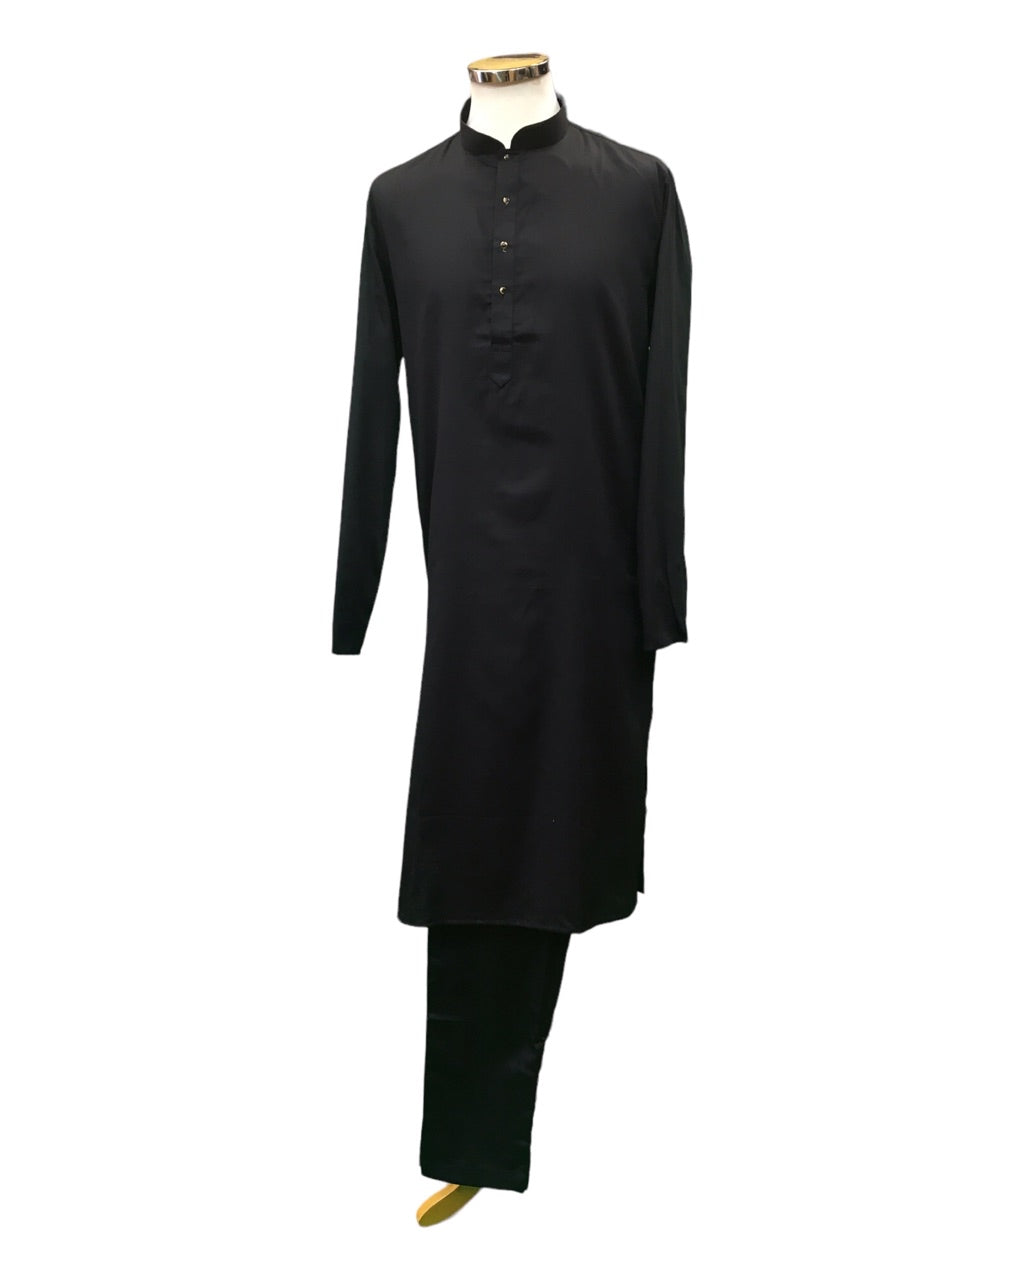 Leather Cotton Mens Indian Kurta set in Black - for Sangeet, Mehndi, Eid Celebration (with smart trousers) - Farishta KP